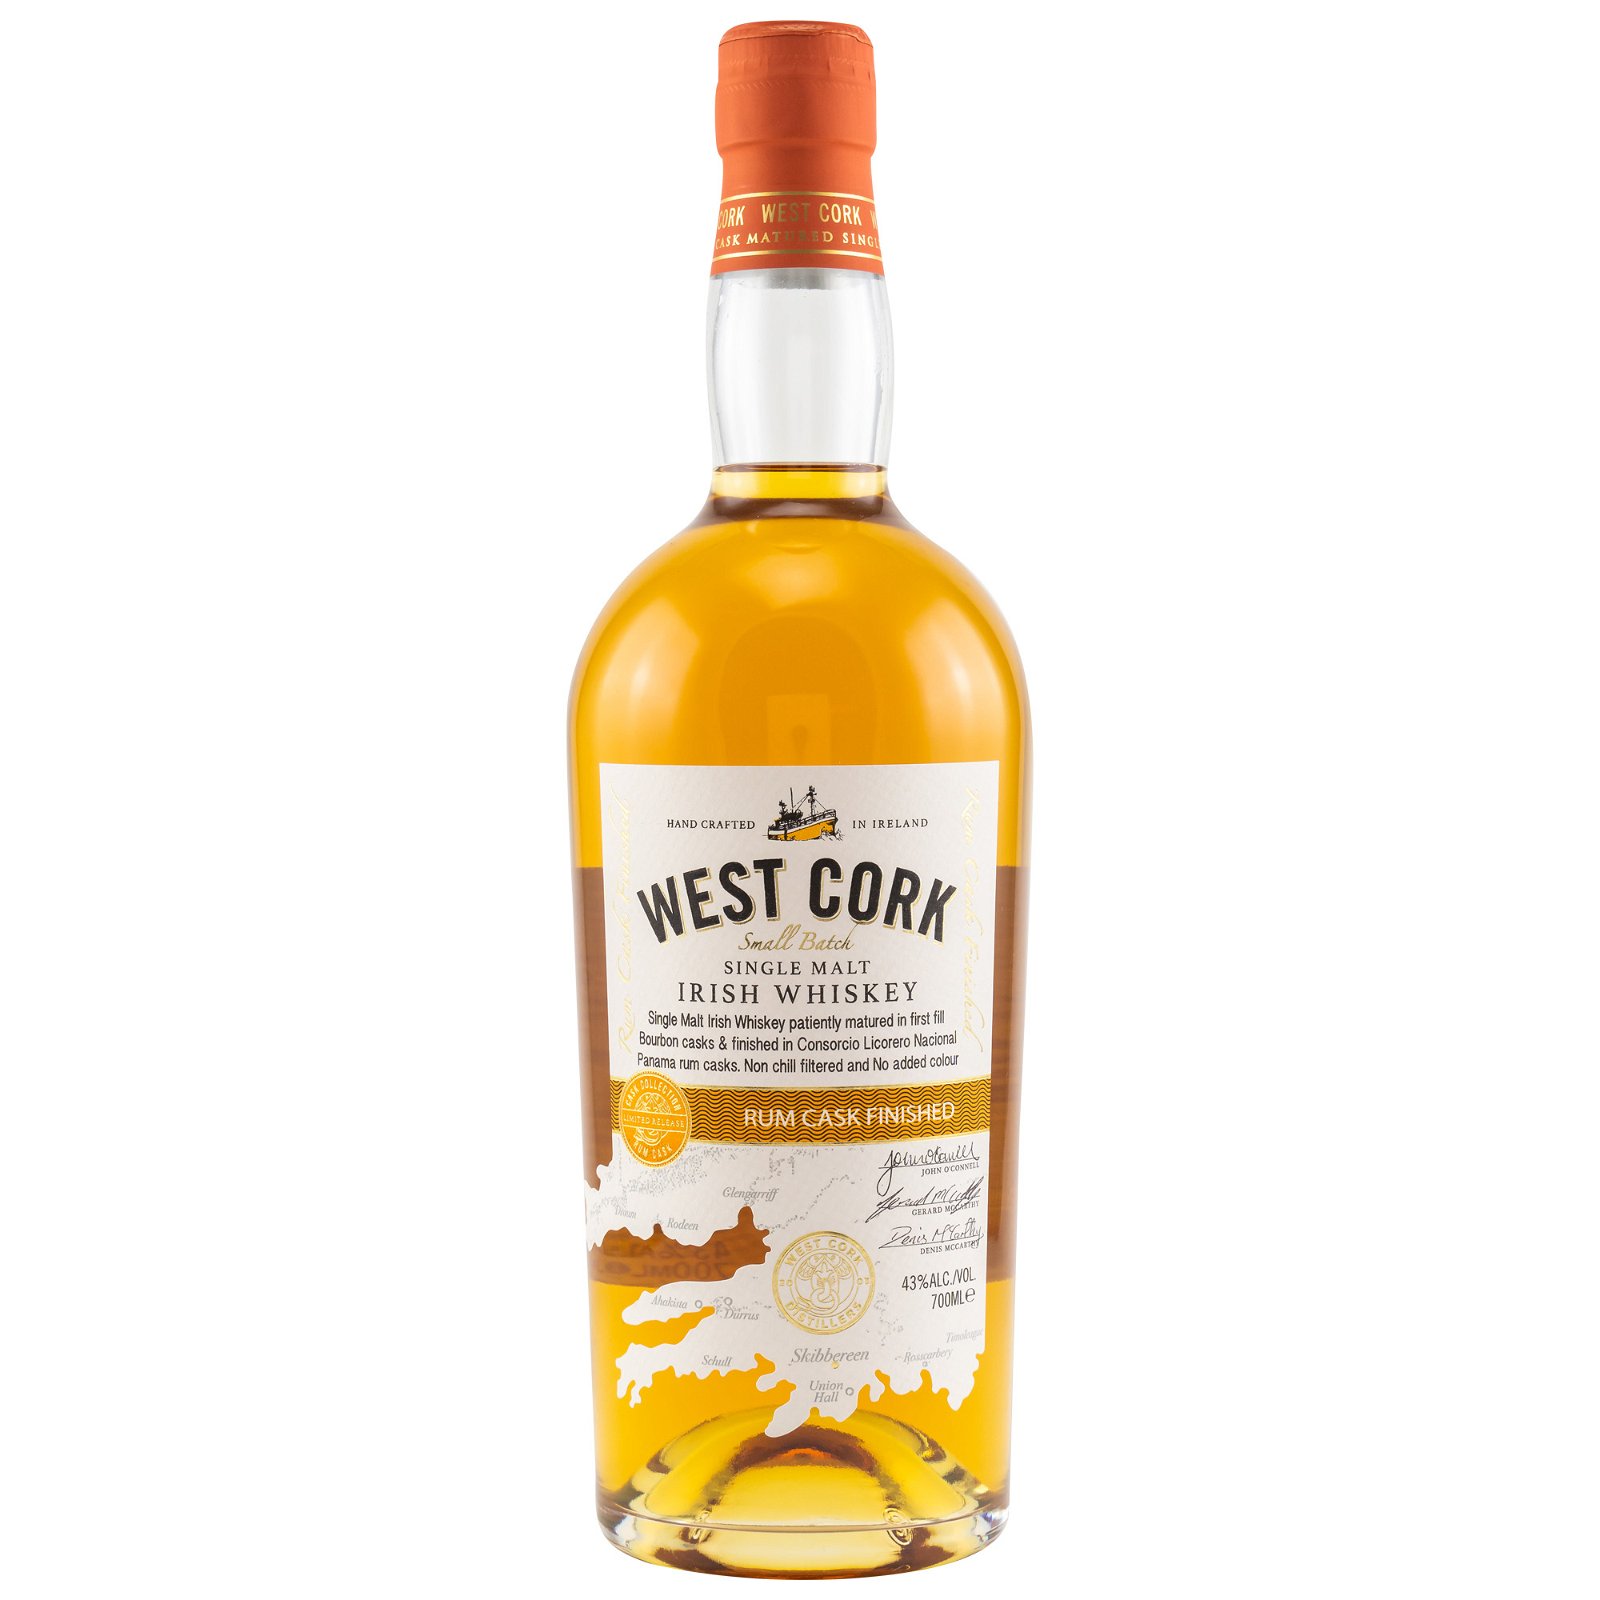 West Cork Small Batch Single Malt Rum Cask Finish